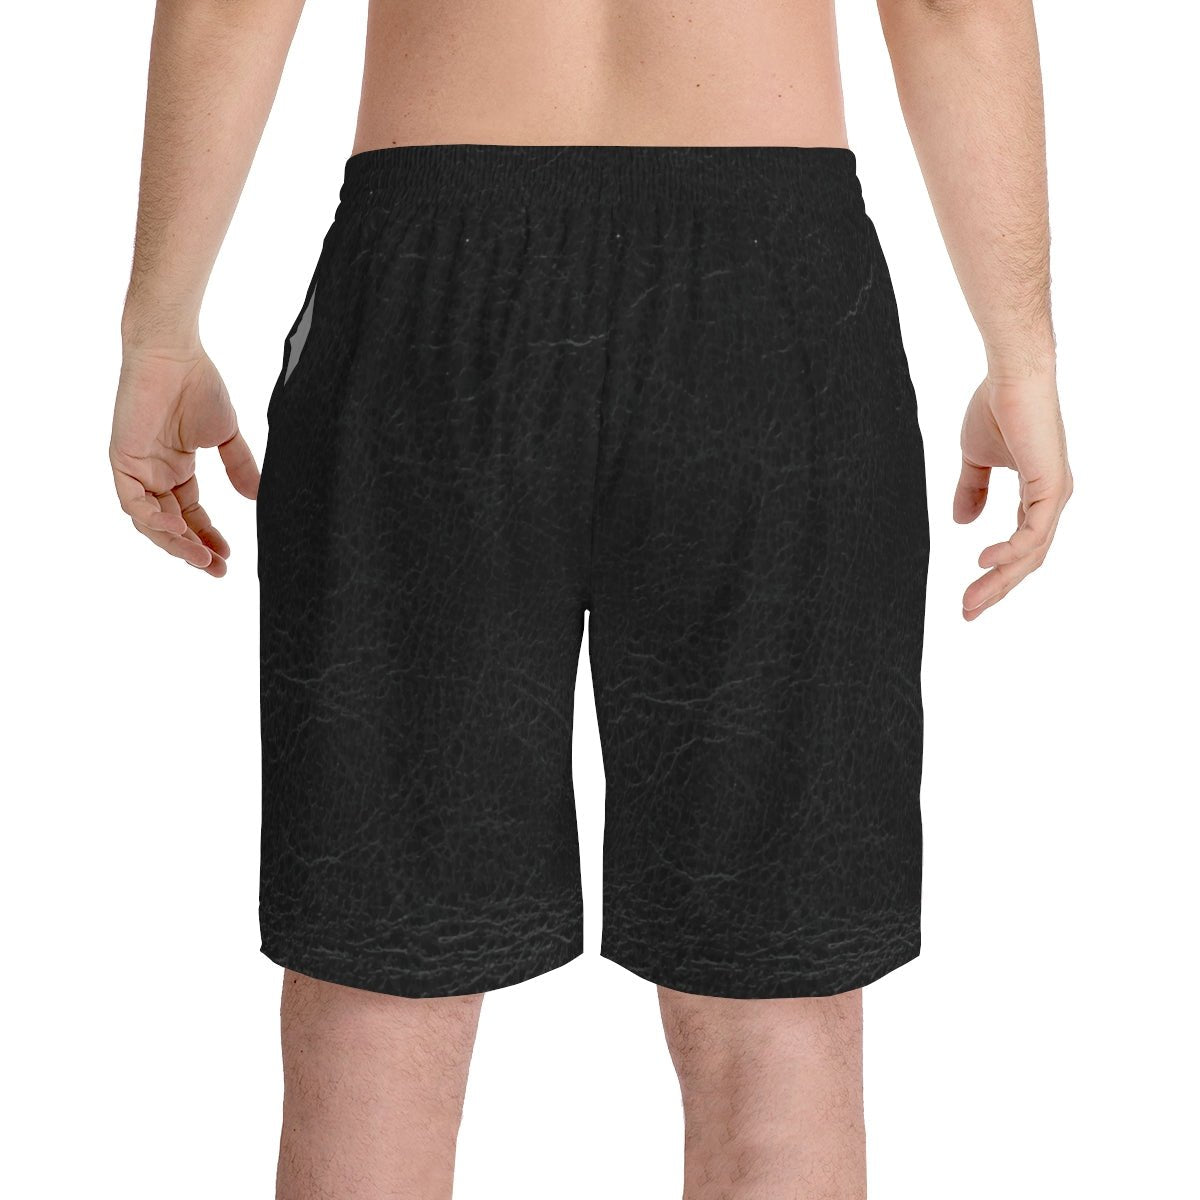 LEATHERTONE [Black] Beach Shorts | CANAANWEAR | Shorts | AOP